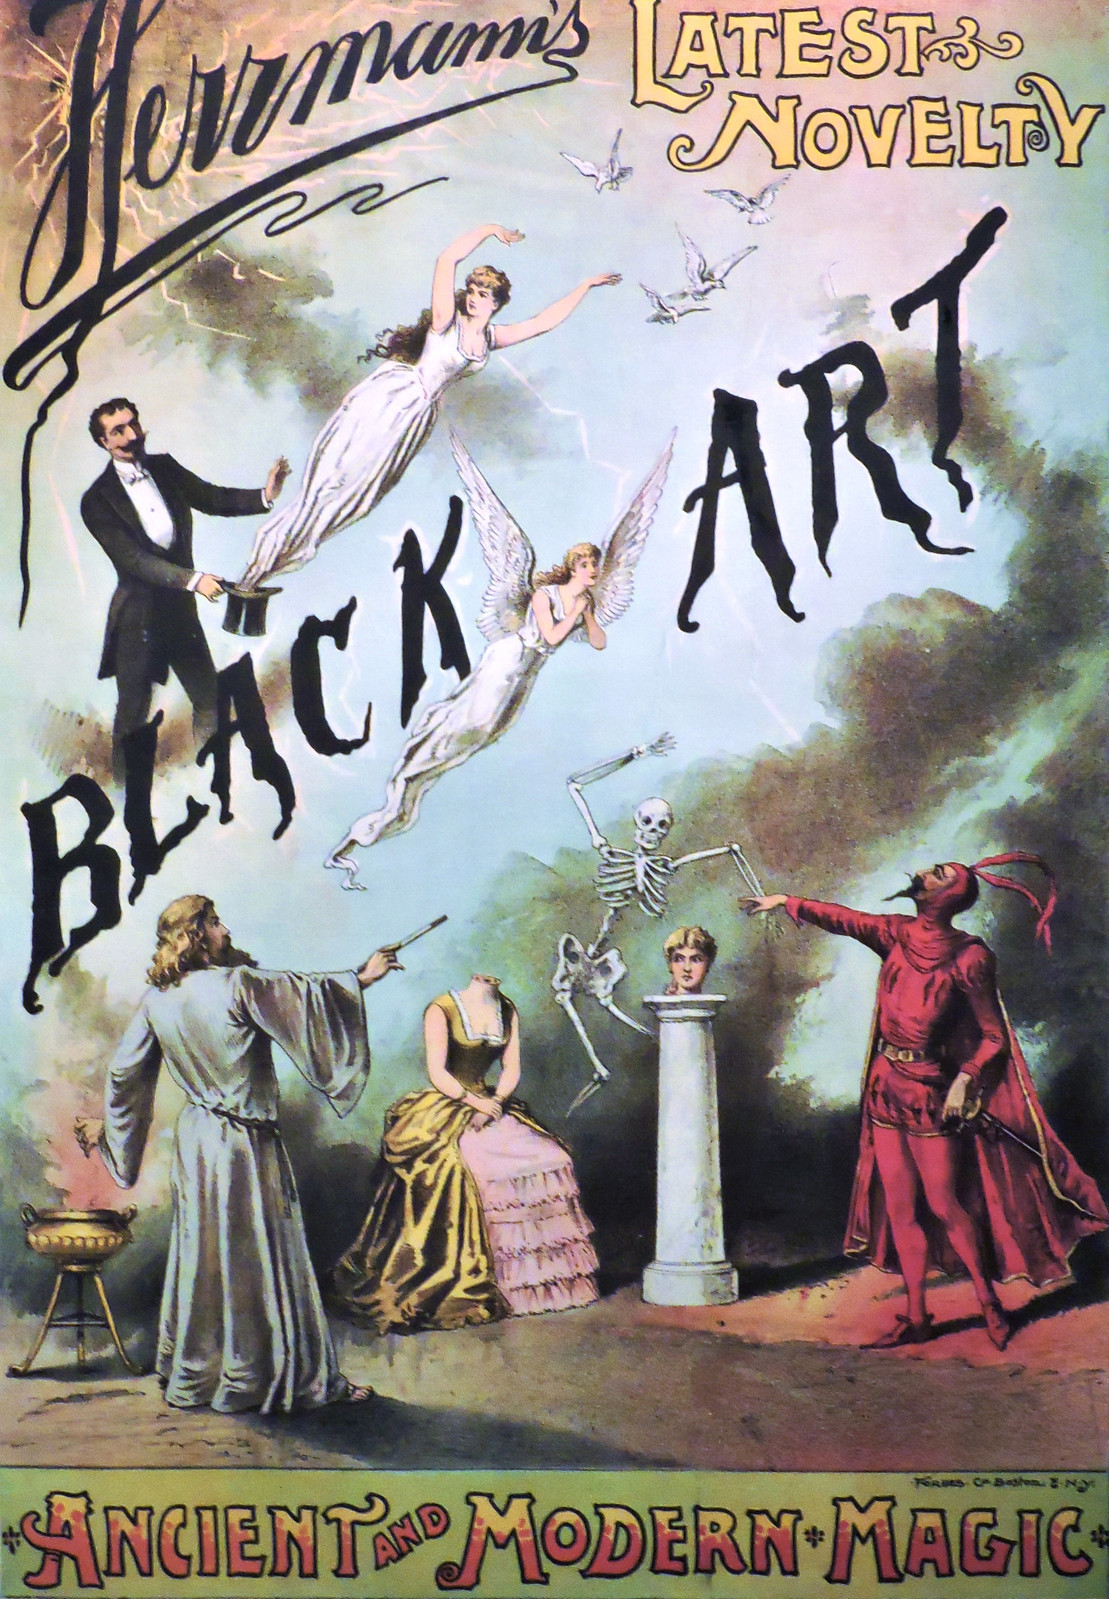 Herrmann's Latest Novelty - Black Art, Ancient and Modern Magic